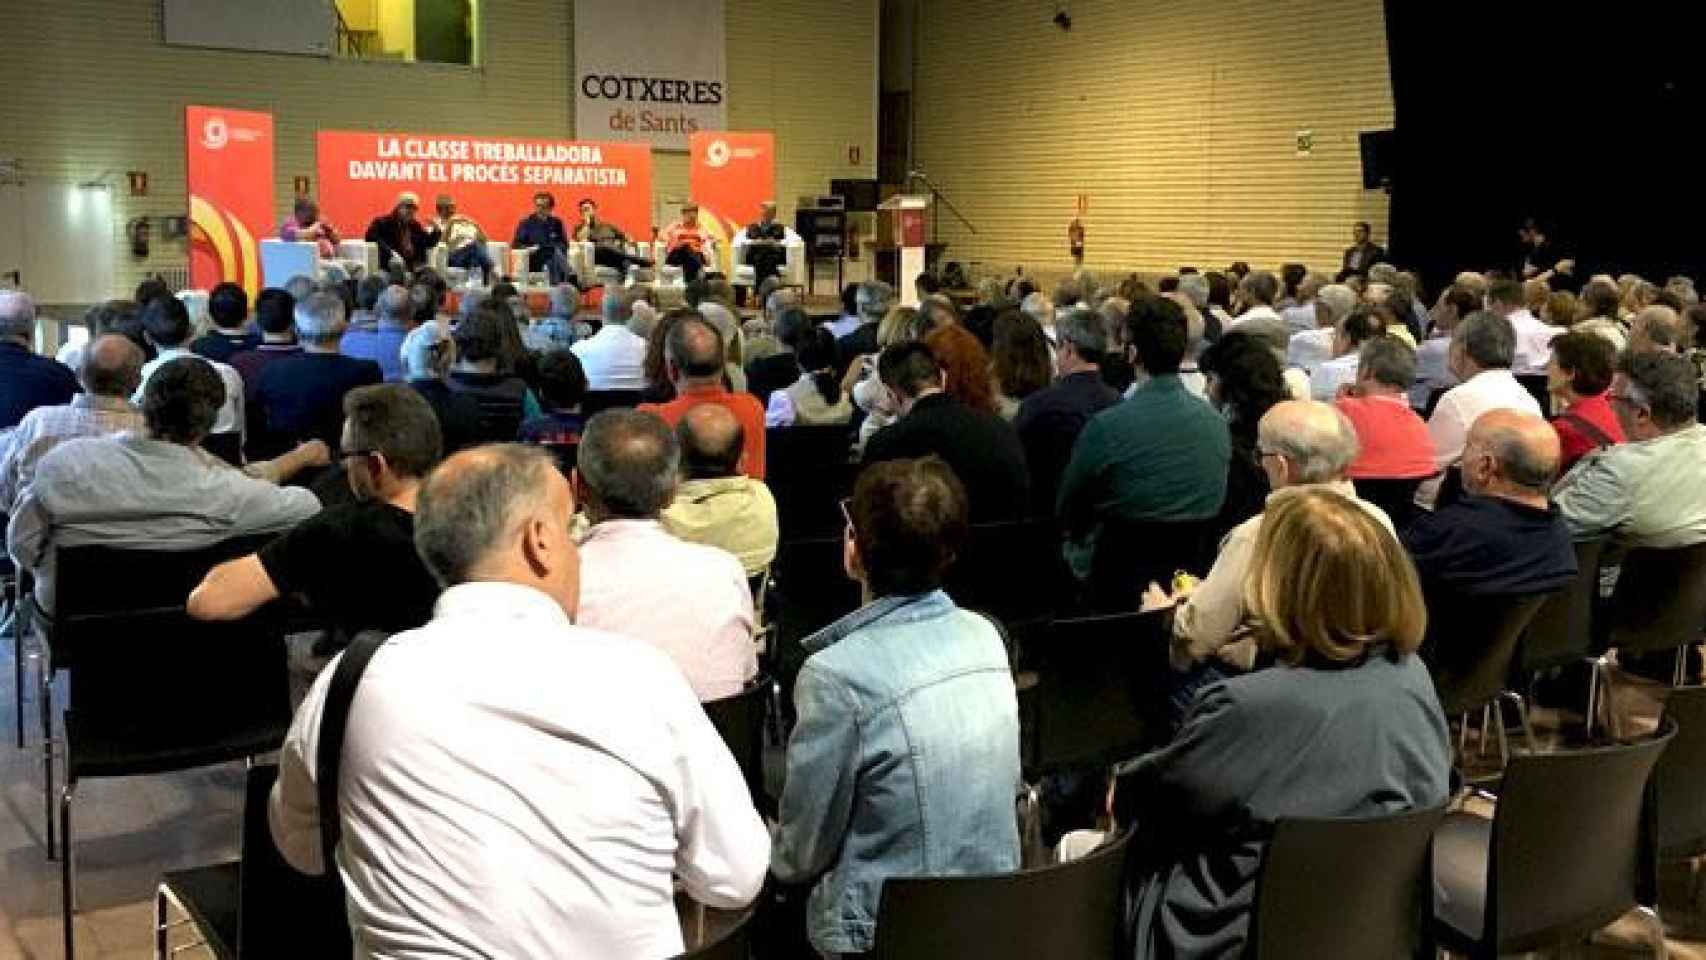 Societat Civil Catalana ha mantenido un debate sobre el papel de la clase trabajadora en el 'procés' en el centro cívico de Les Cotxeres de Sants, en Barcelona / CG